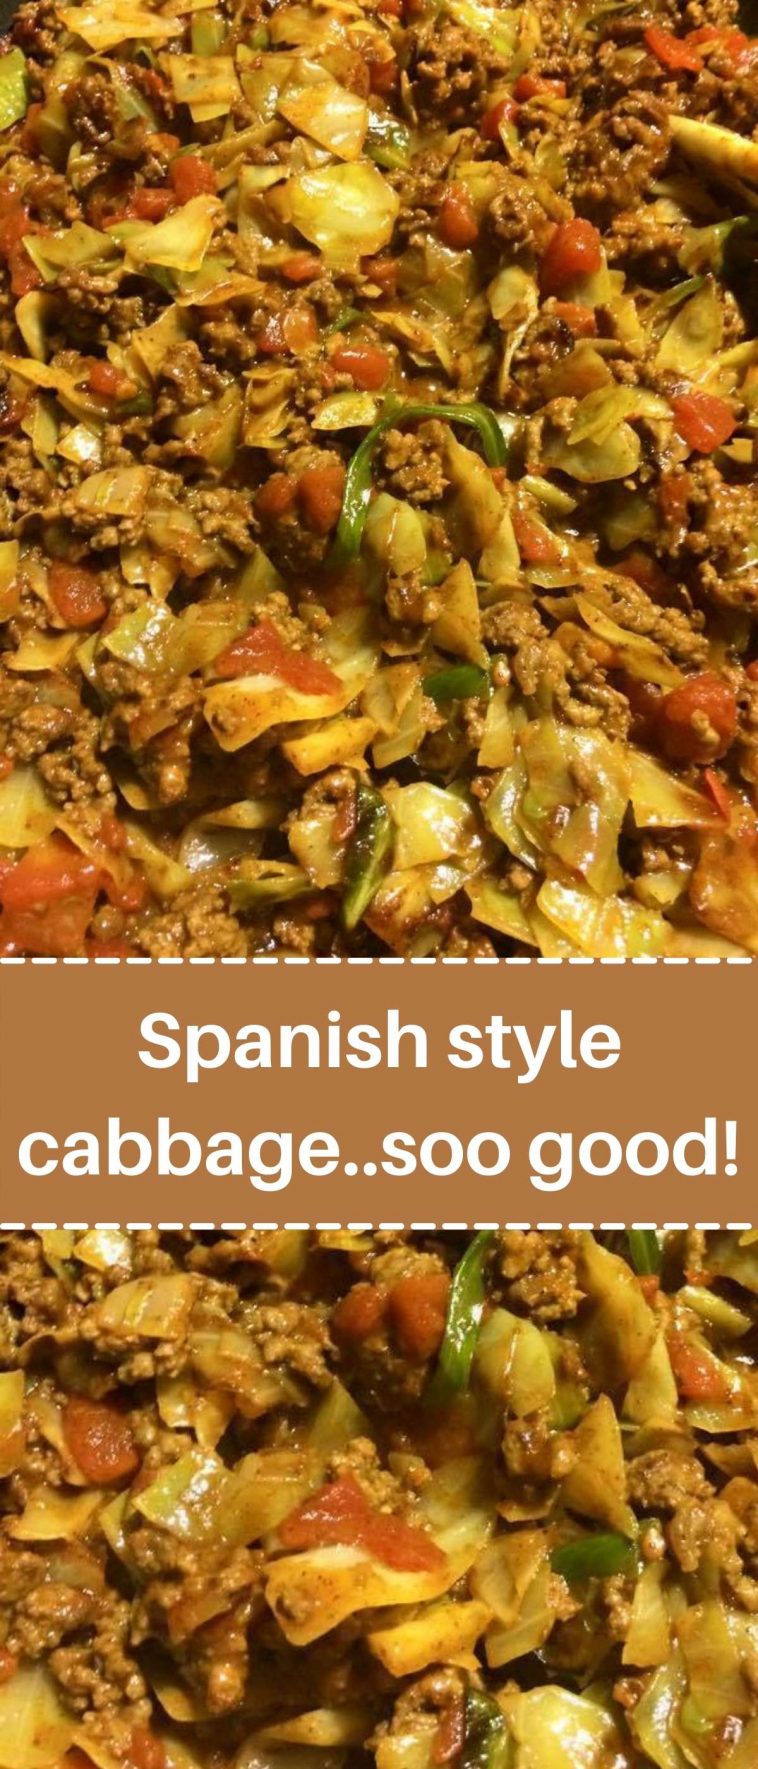 Spanish style cabbage..sooooo good!!!!